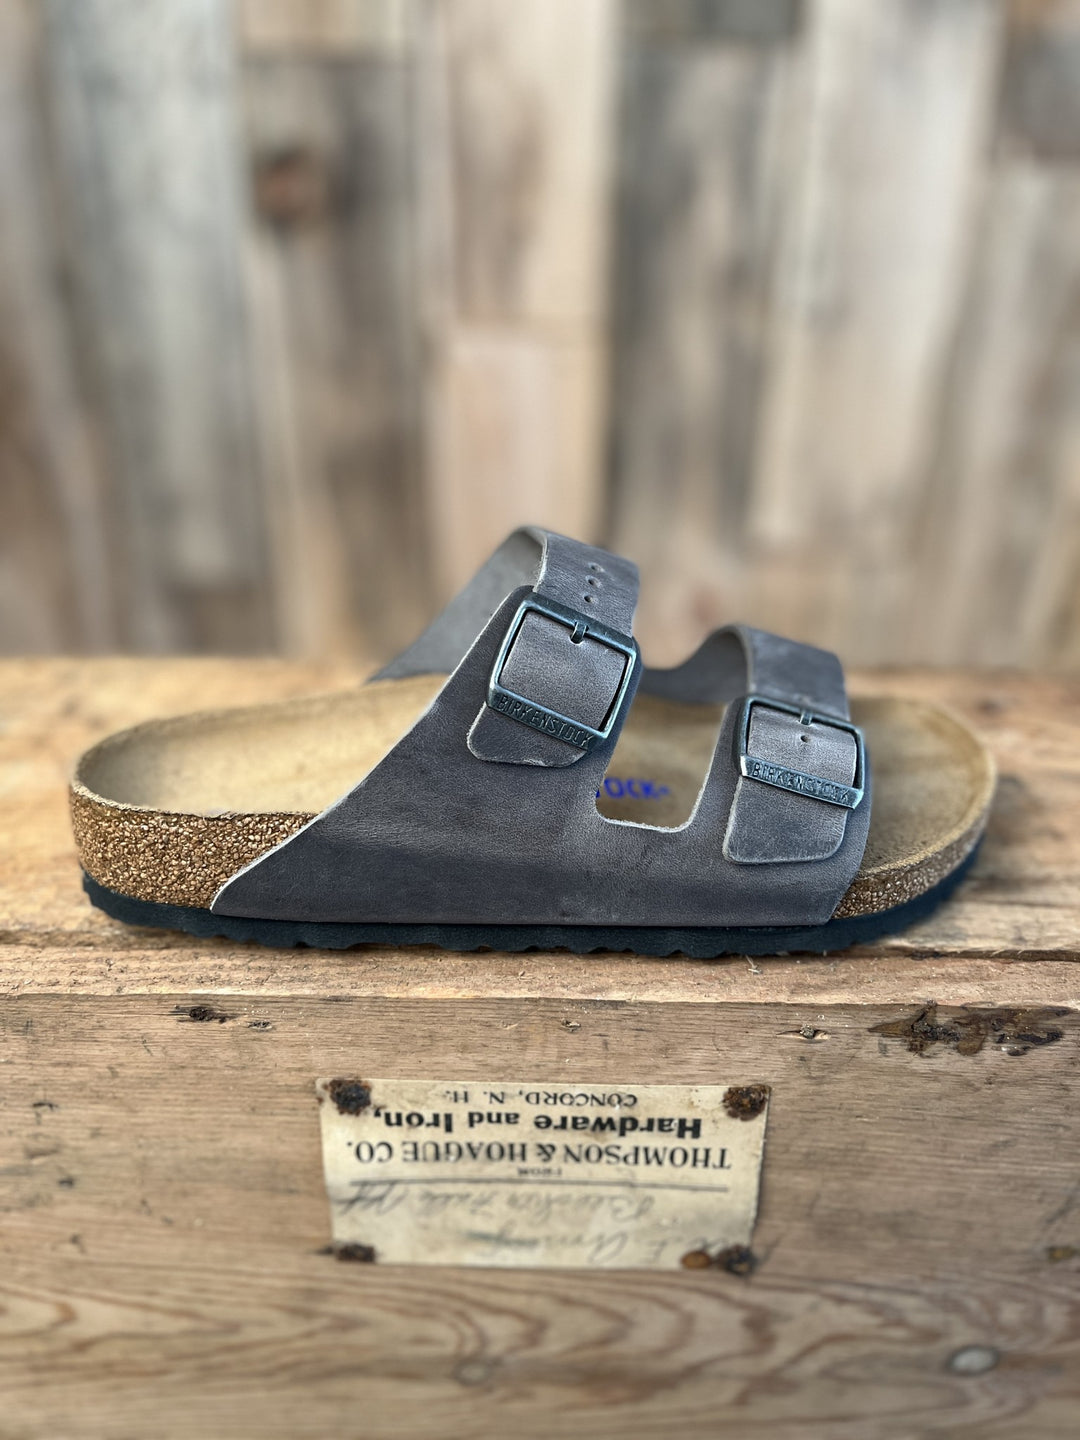 Birkenstock Arizona Soft Footbed Oiled Leather Sandal Iron